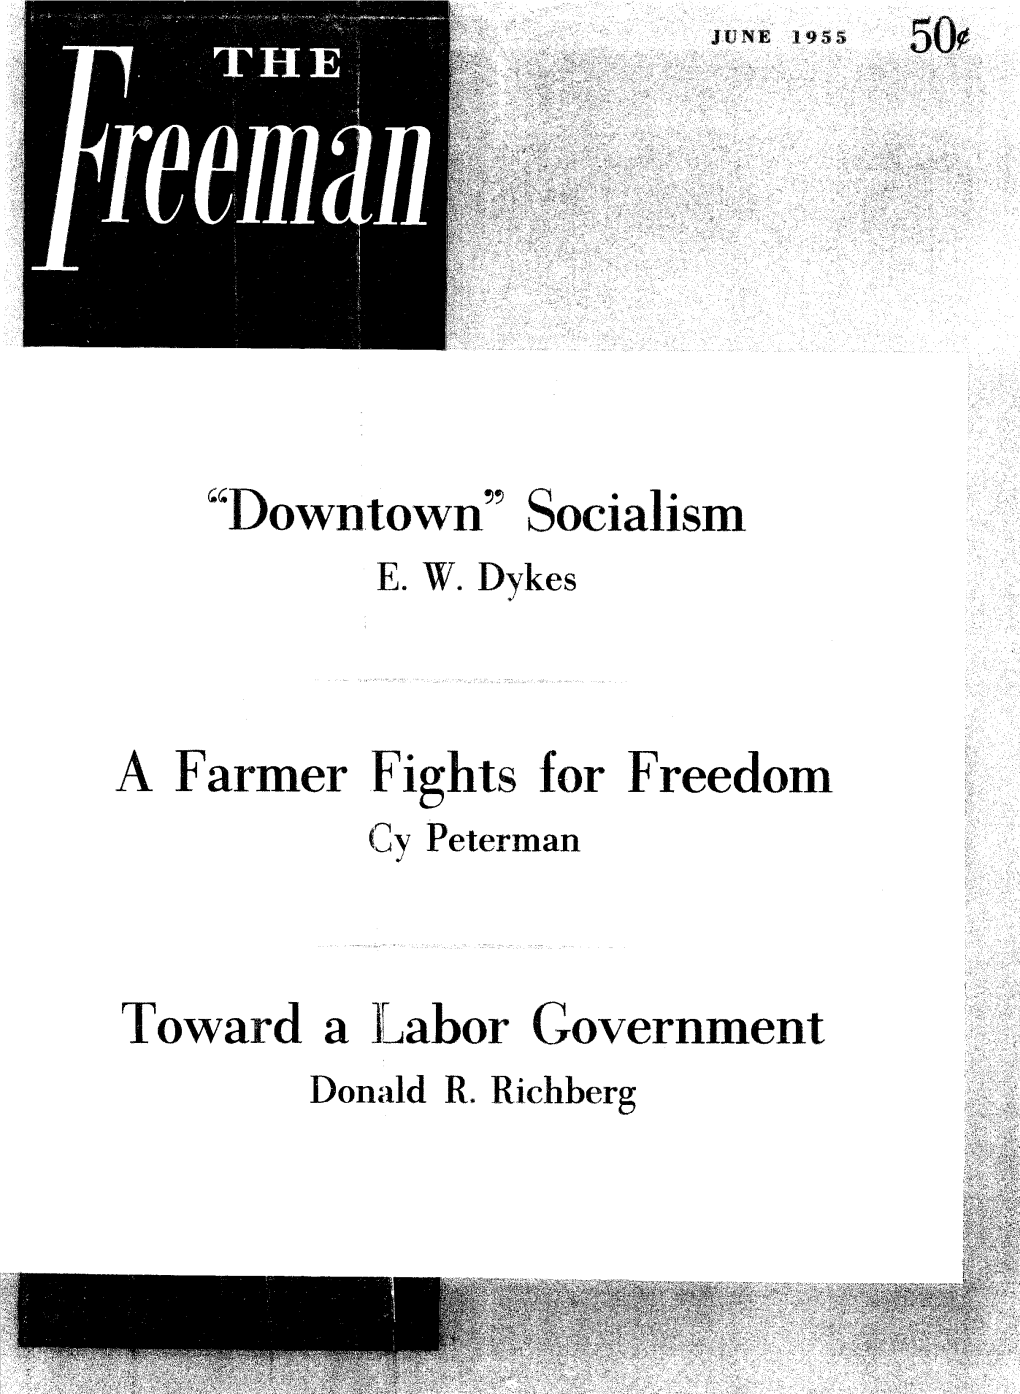 The Freeman June 1955